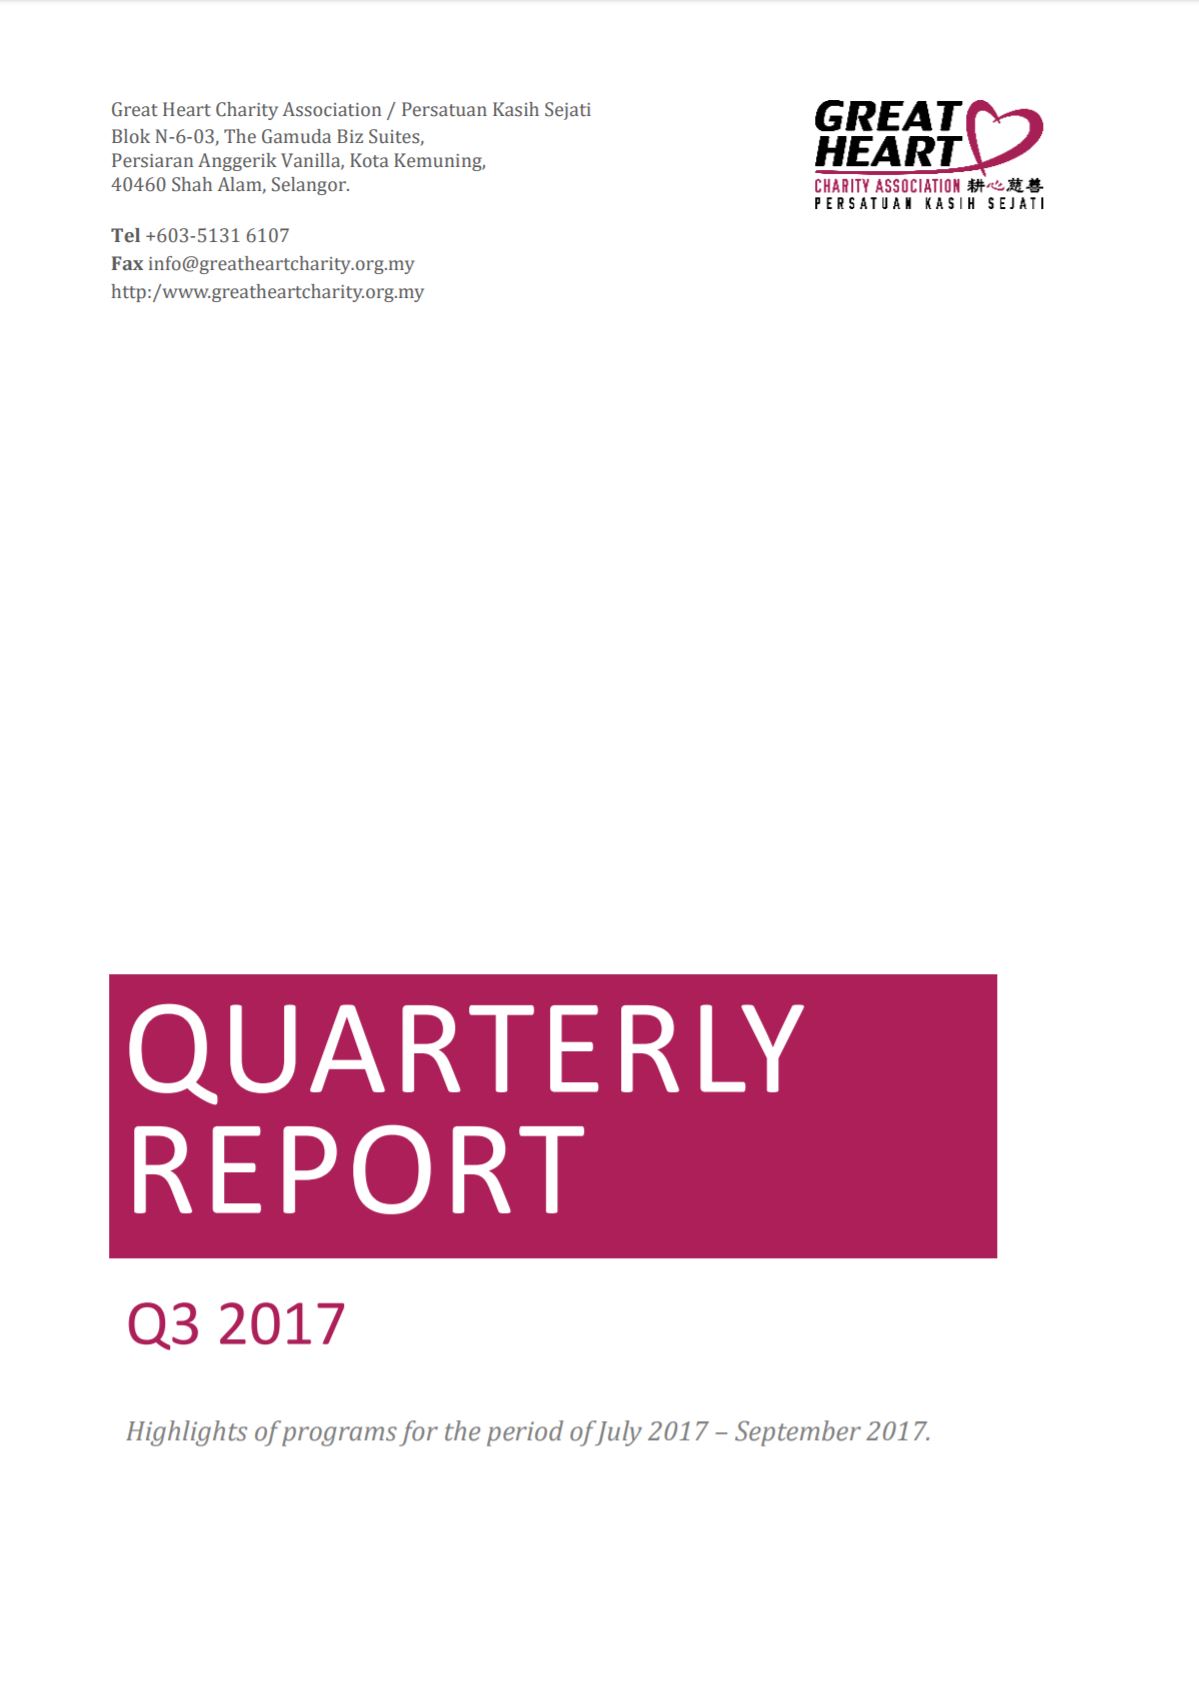 Great Heart Quarterly Report - Quarter 3 - 2017